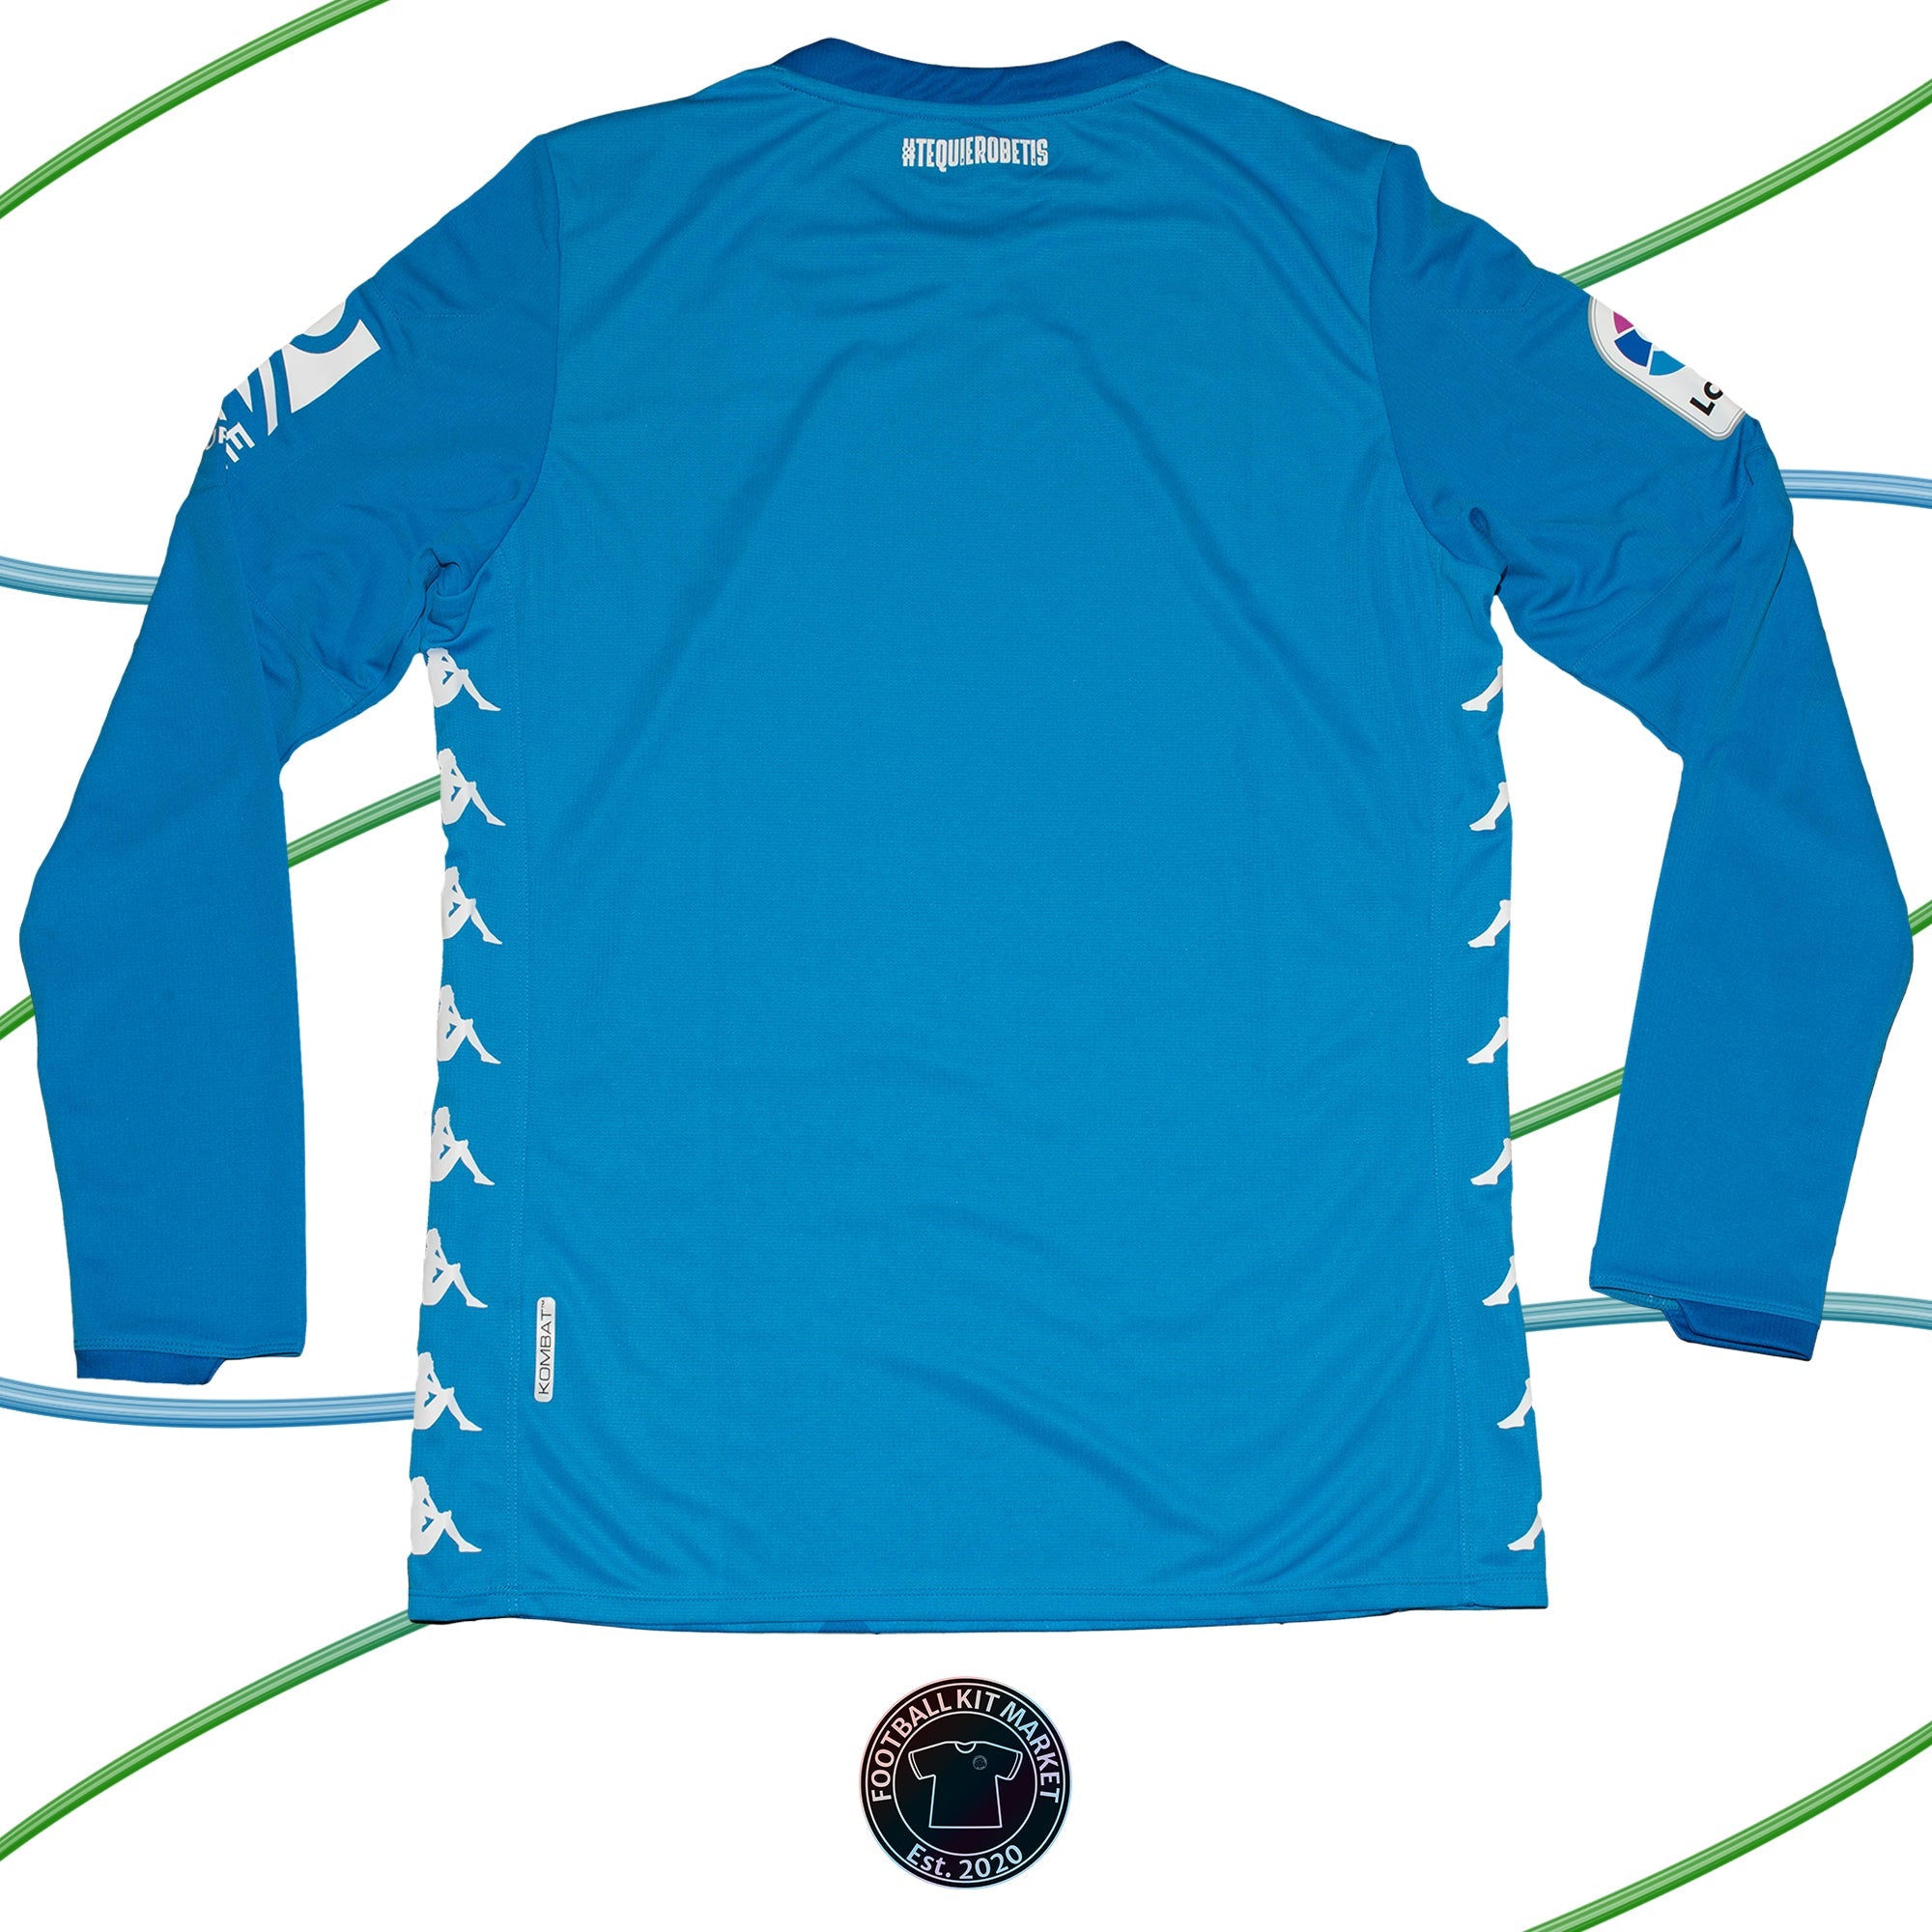 Genuine REAL BETIS Goalkeeper Shirt (2019-2020) - KAPPA (XL) - Product Image from Football Kit Market